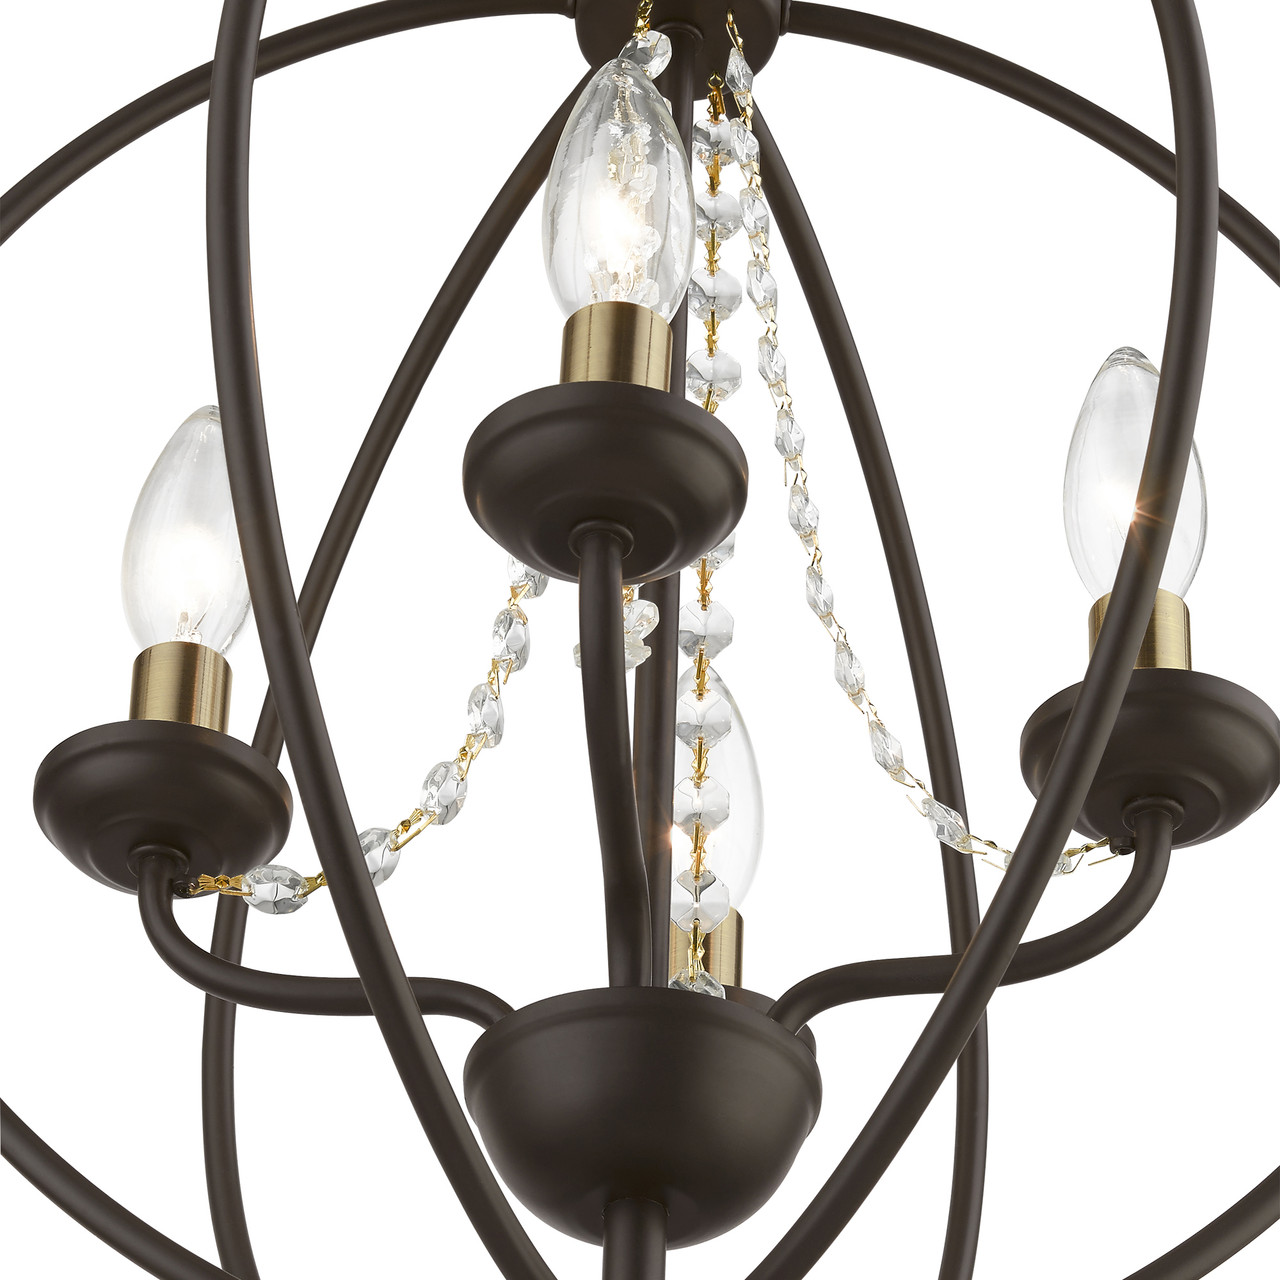 LIVEX LIGHTING 40914-07 4 Light Bronze with Antique Brass Finish Candles Globe Convertible Chandelier/ Semi-Flush